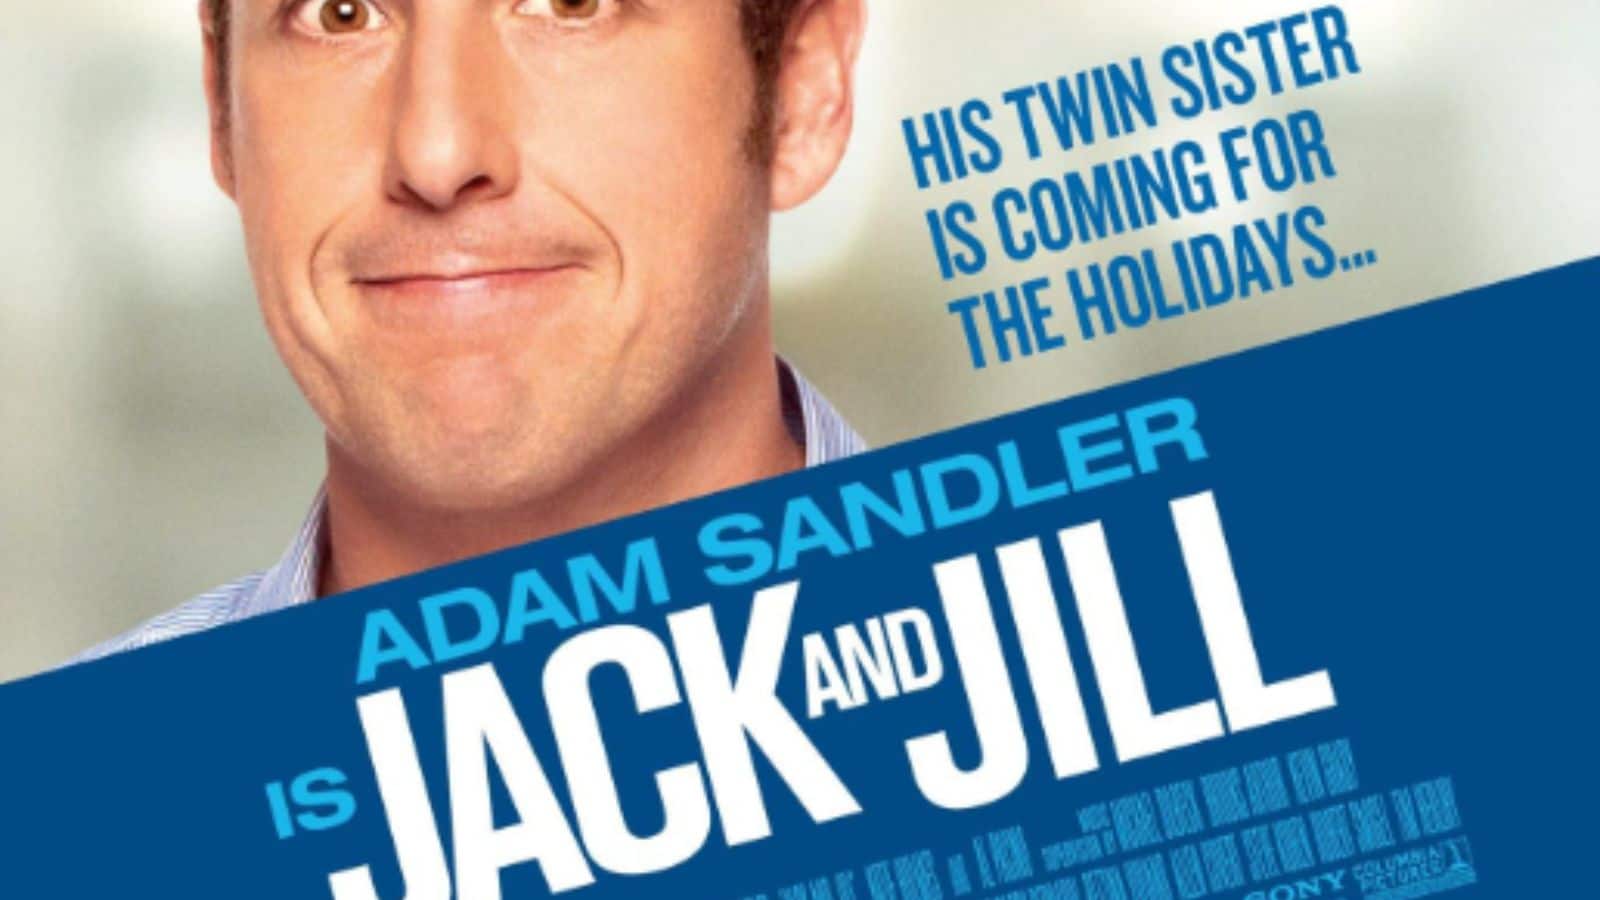 "Jack and Jill" (2011)